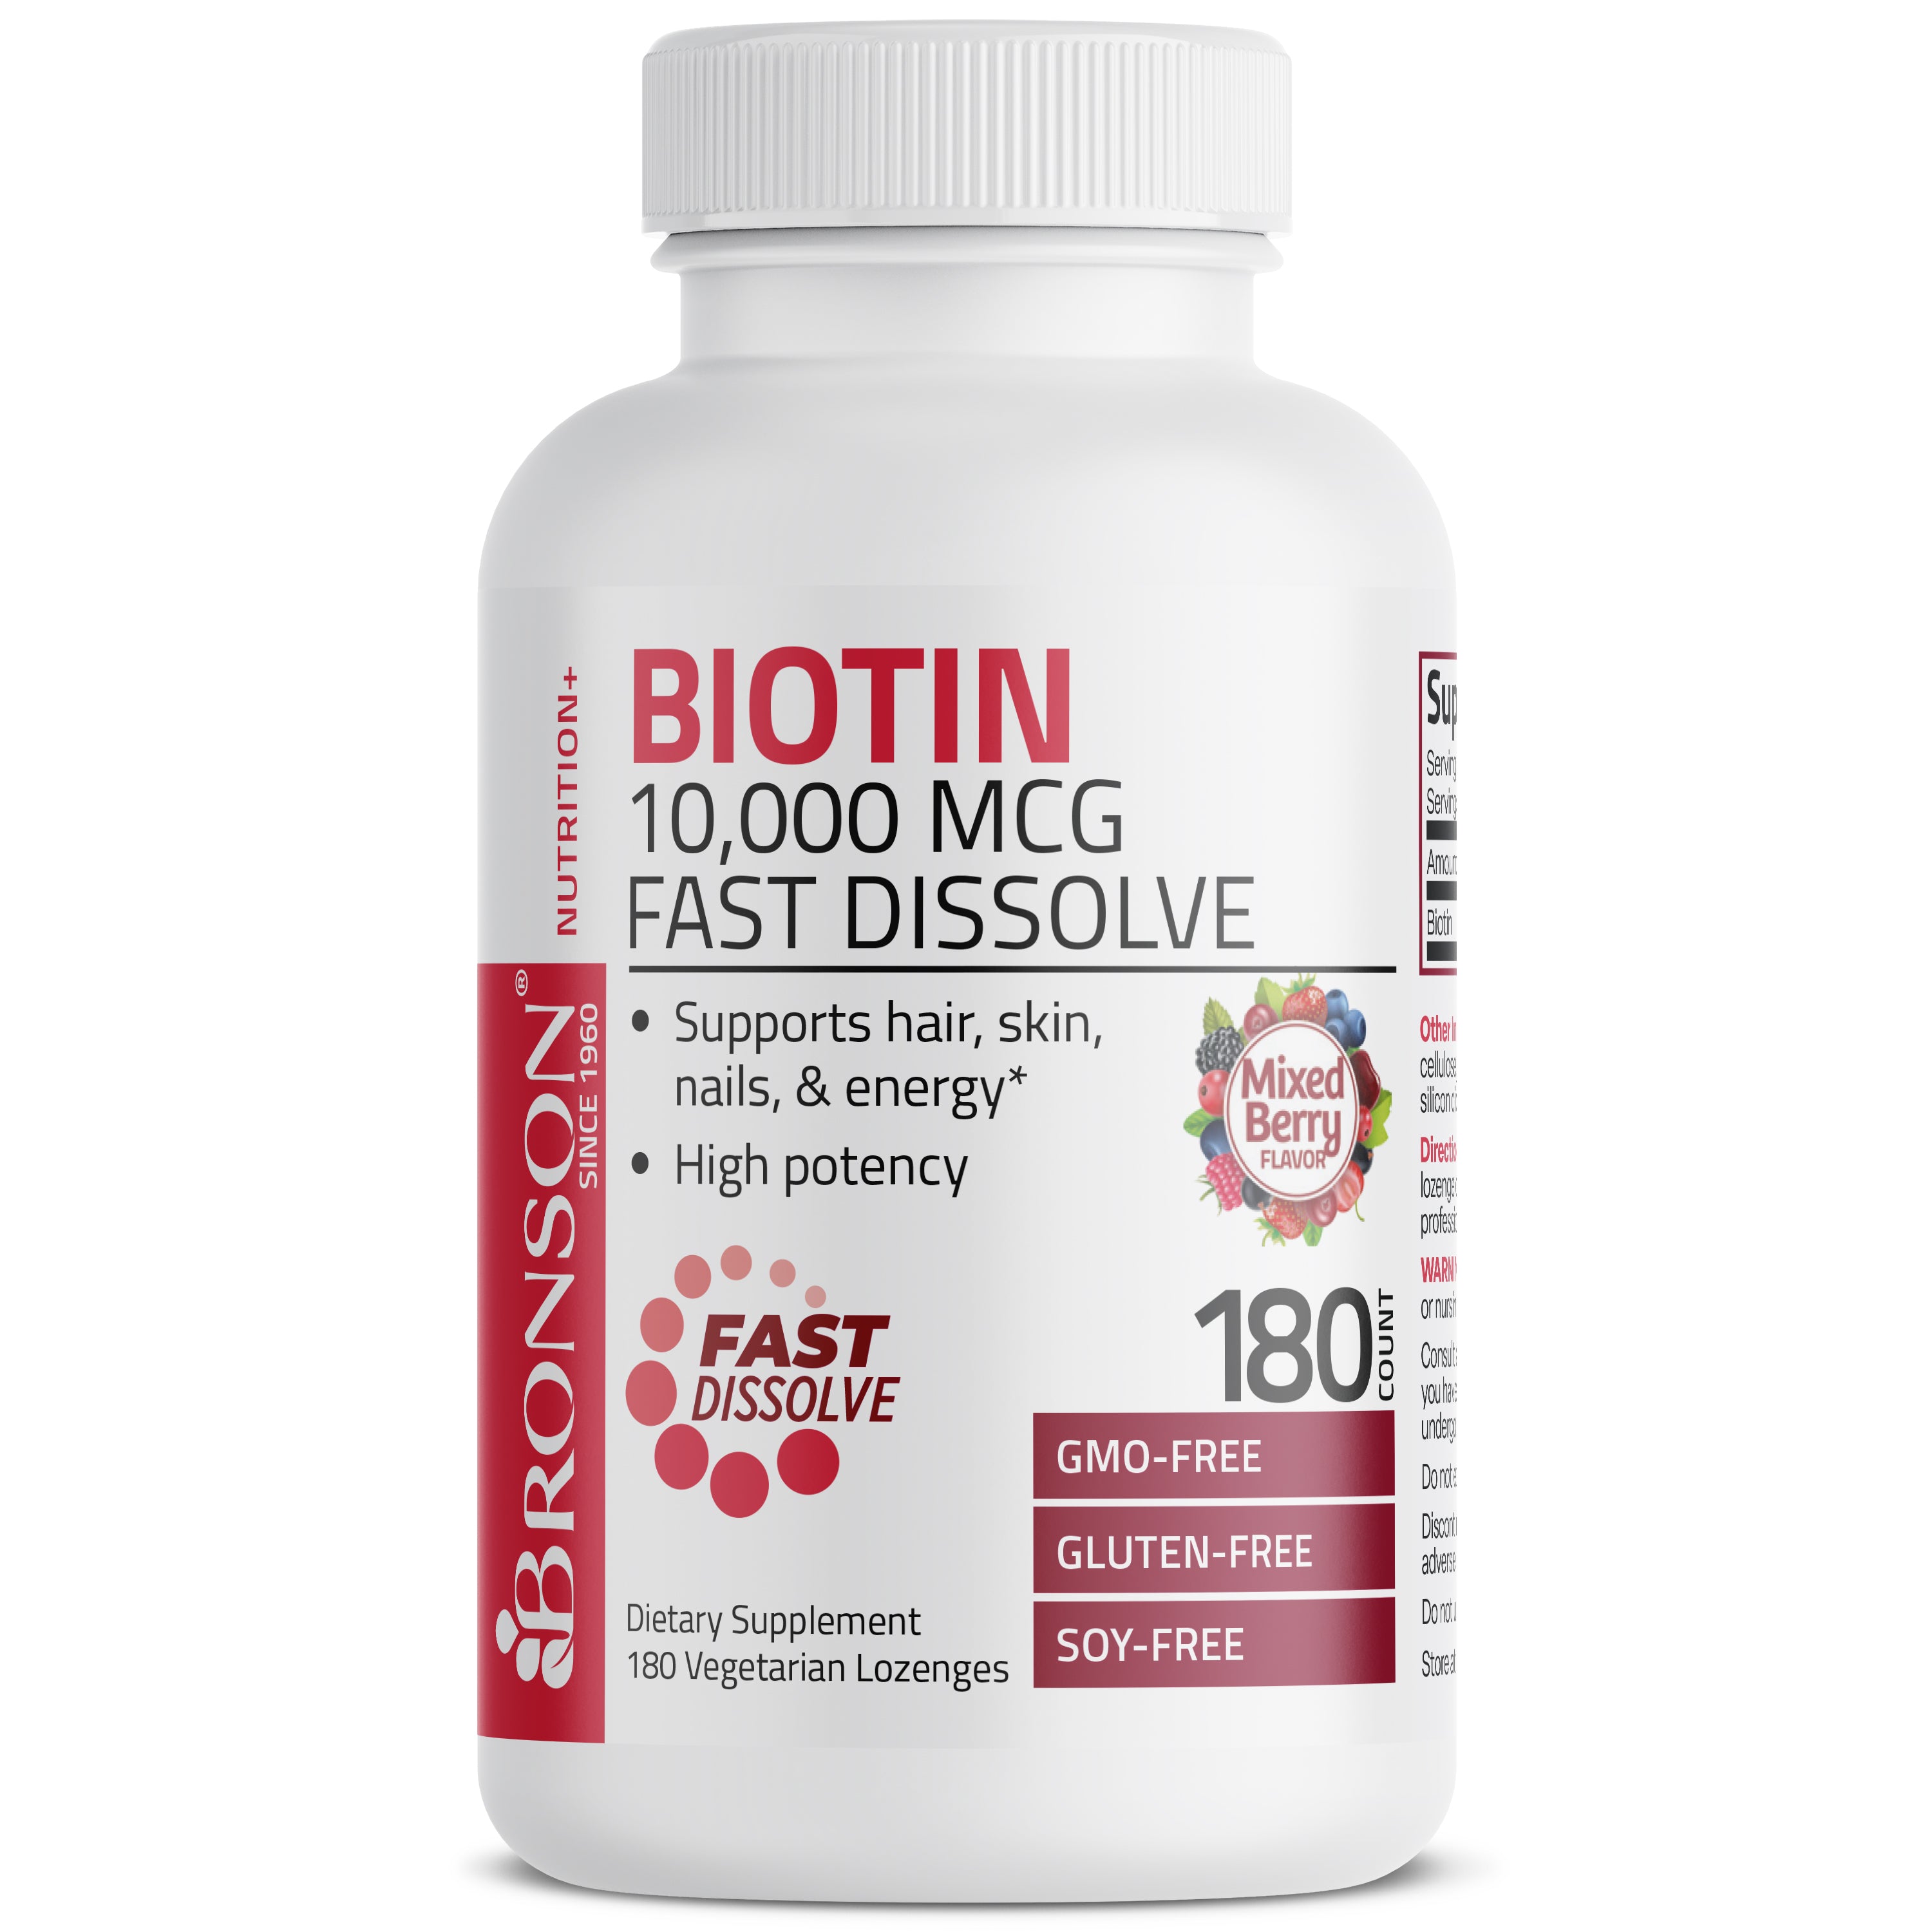 Biotin 10,000 MCG Fast Dissolve Berry Flavored Lozenges view 3 of 6